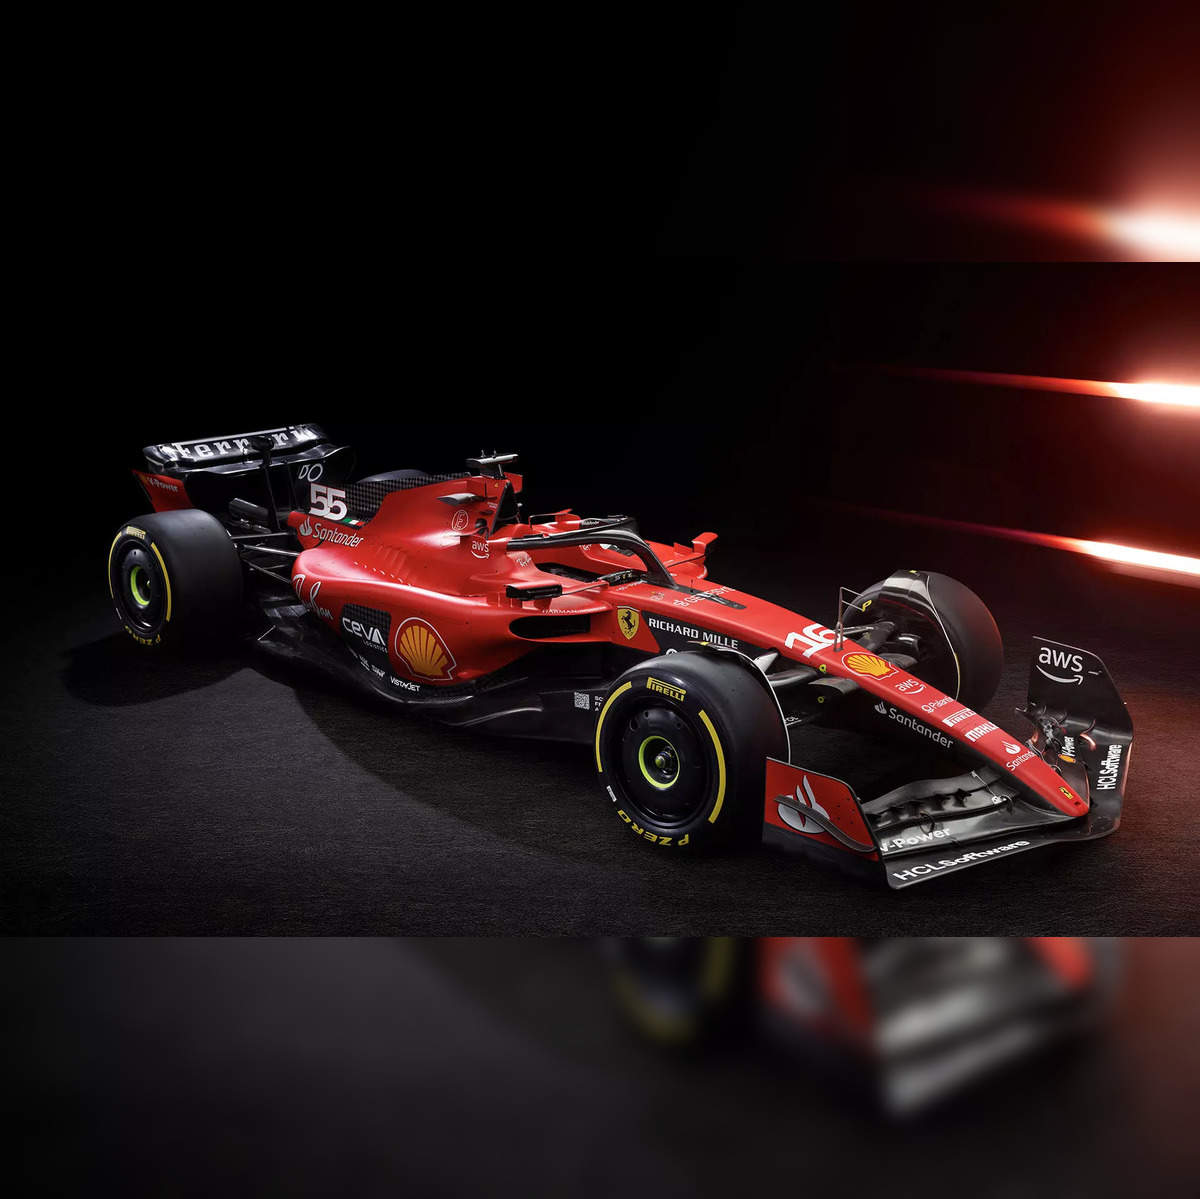 New Formula 1 race car: 2022 F1 car reveal promises better racing